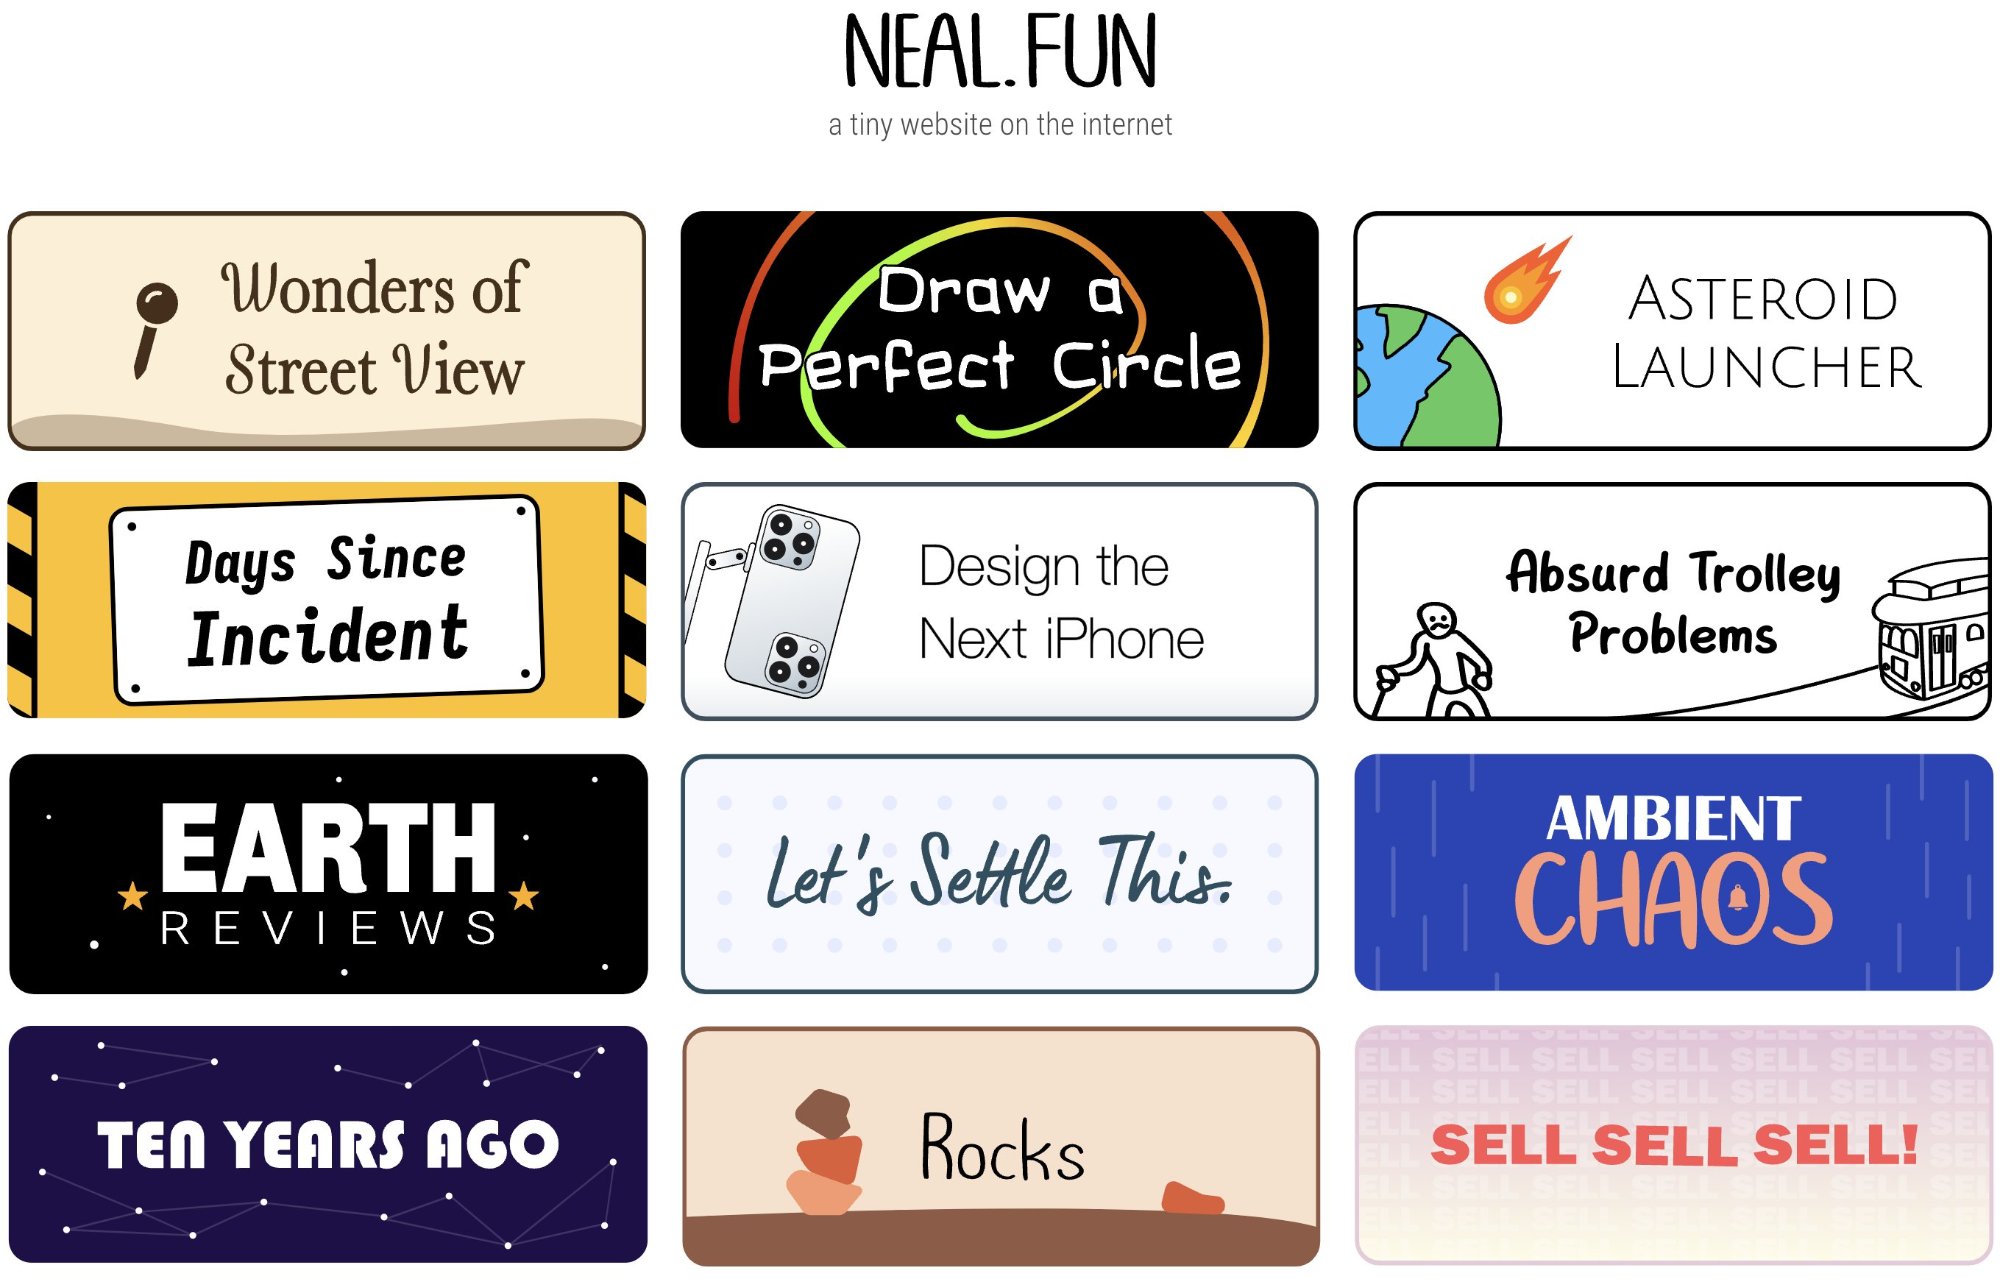 Neal fun. Neal fun на русском языке. Neal fun потратьте деньги. Neal fun iphone Design. Neal fun потратьте